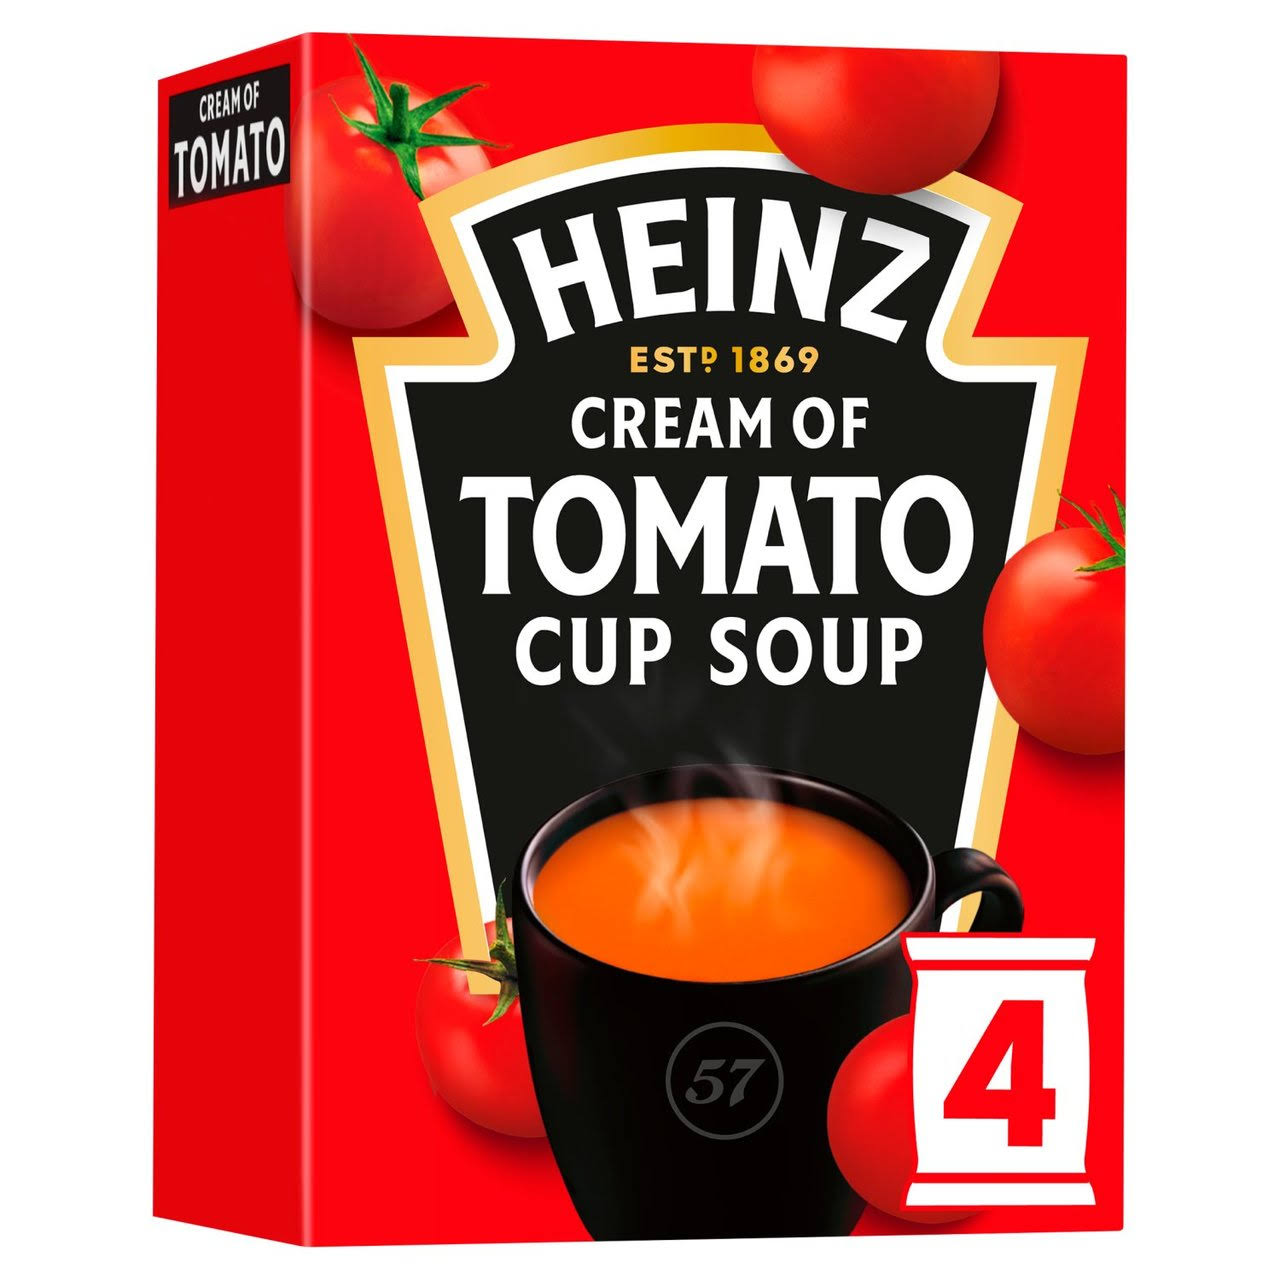 Heinz Cream of Tomato Cup Soup - 22g, 4pk